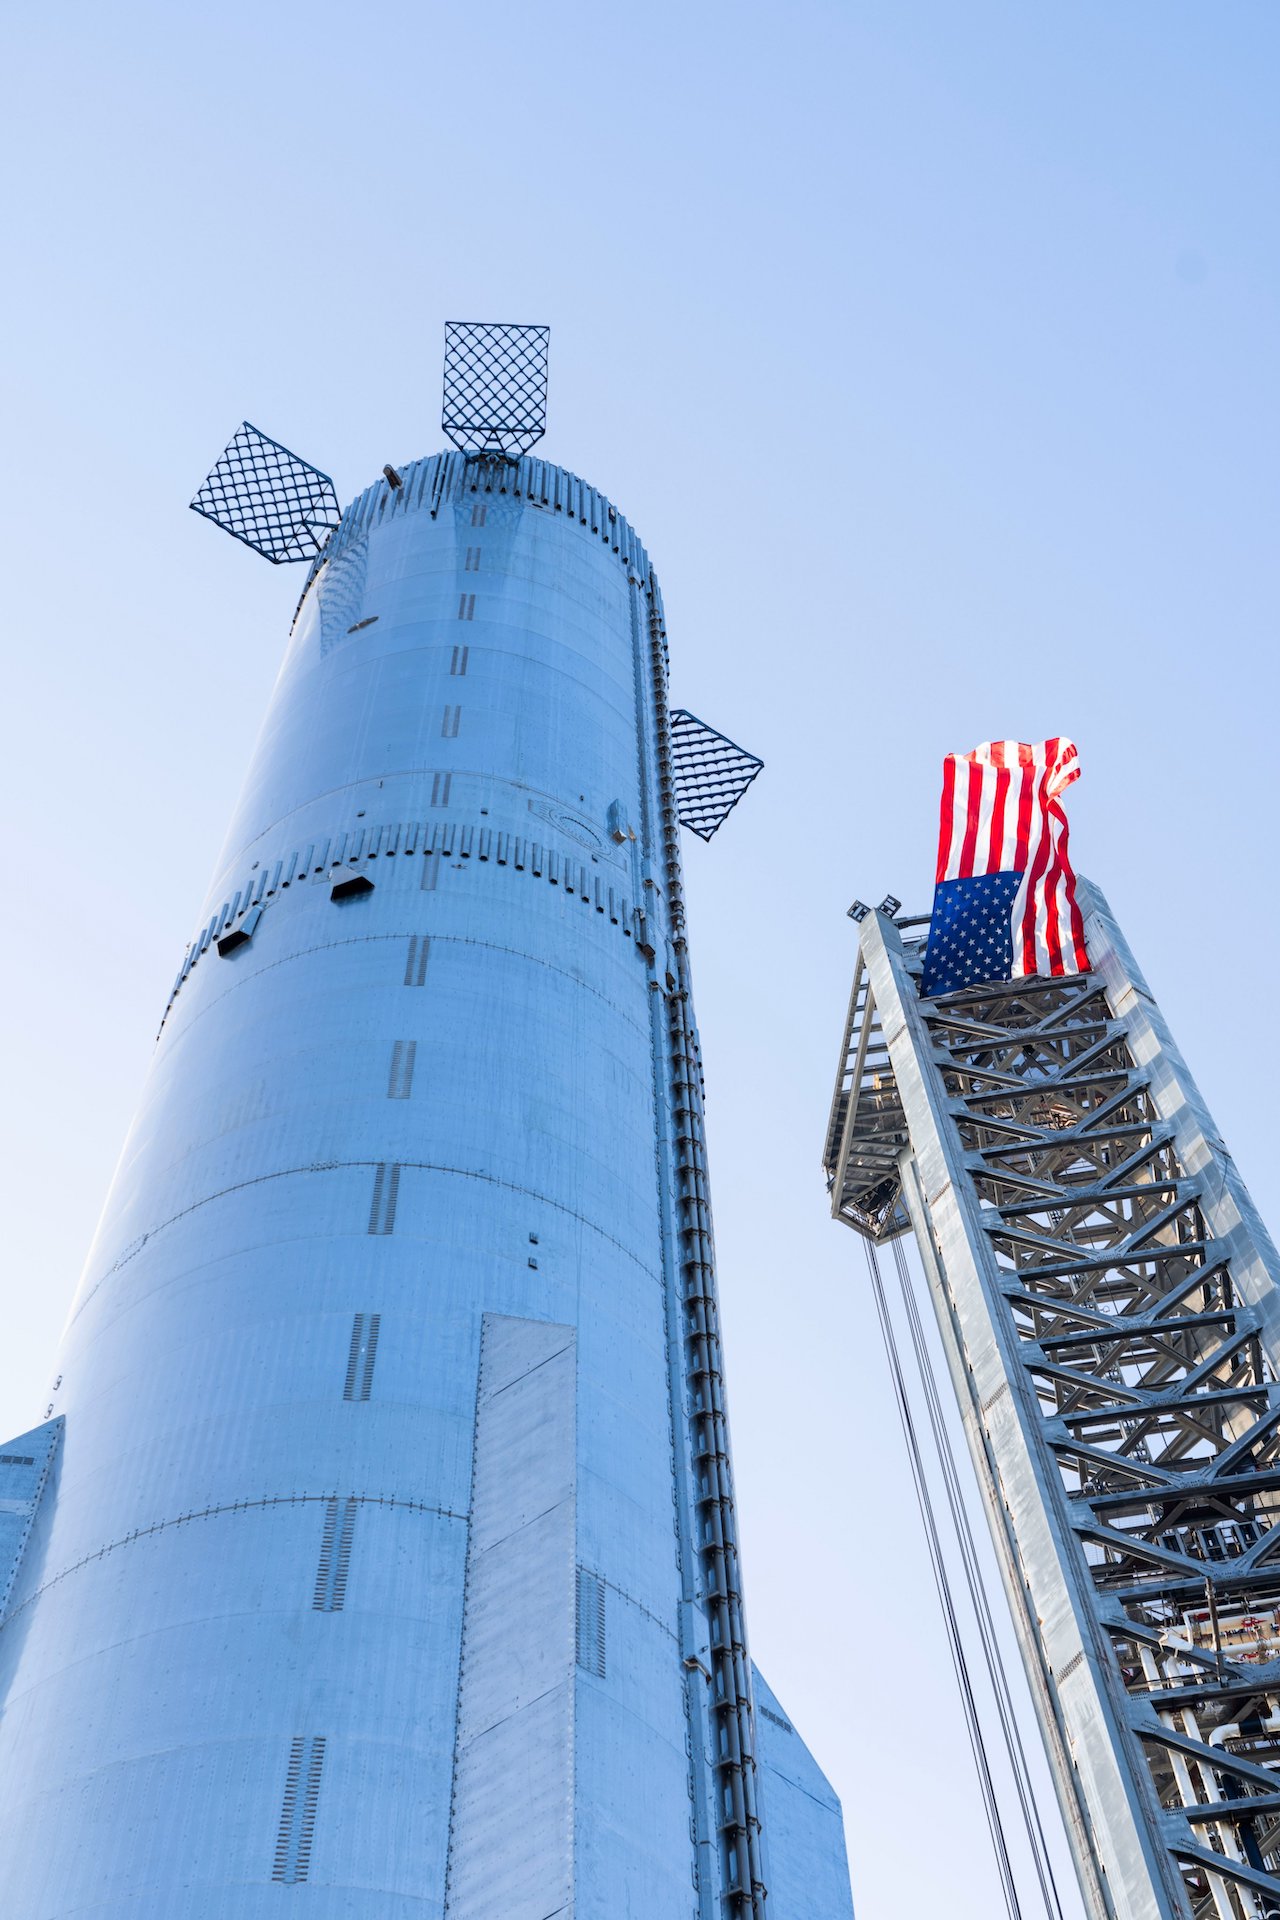 Menara penguat super berat yang sangat tinggi di atas lanskap Texas yang datar saat diangkut ke landasan peluncuran.